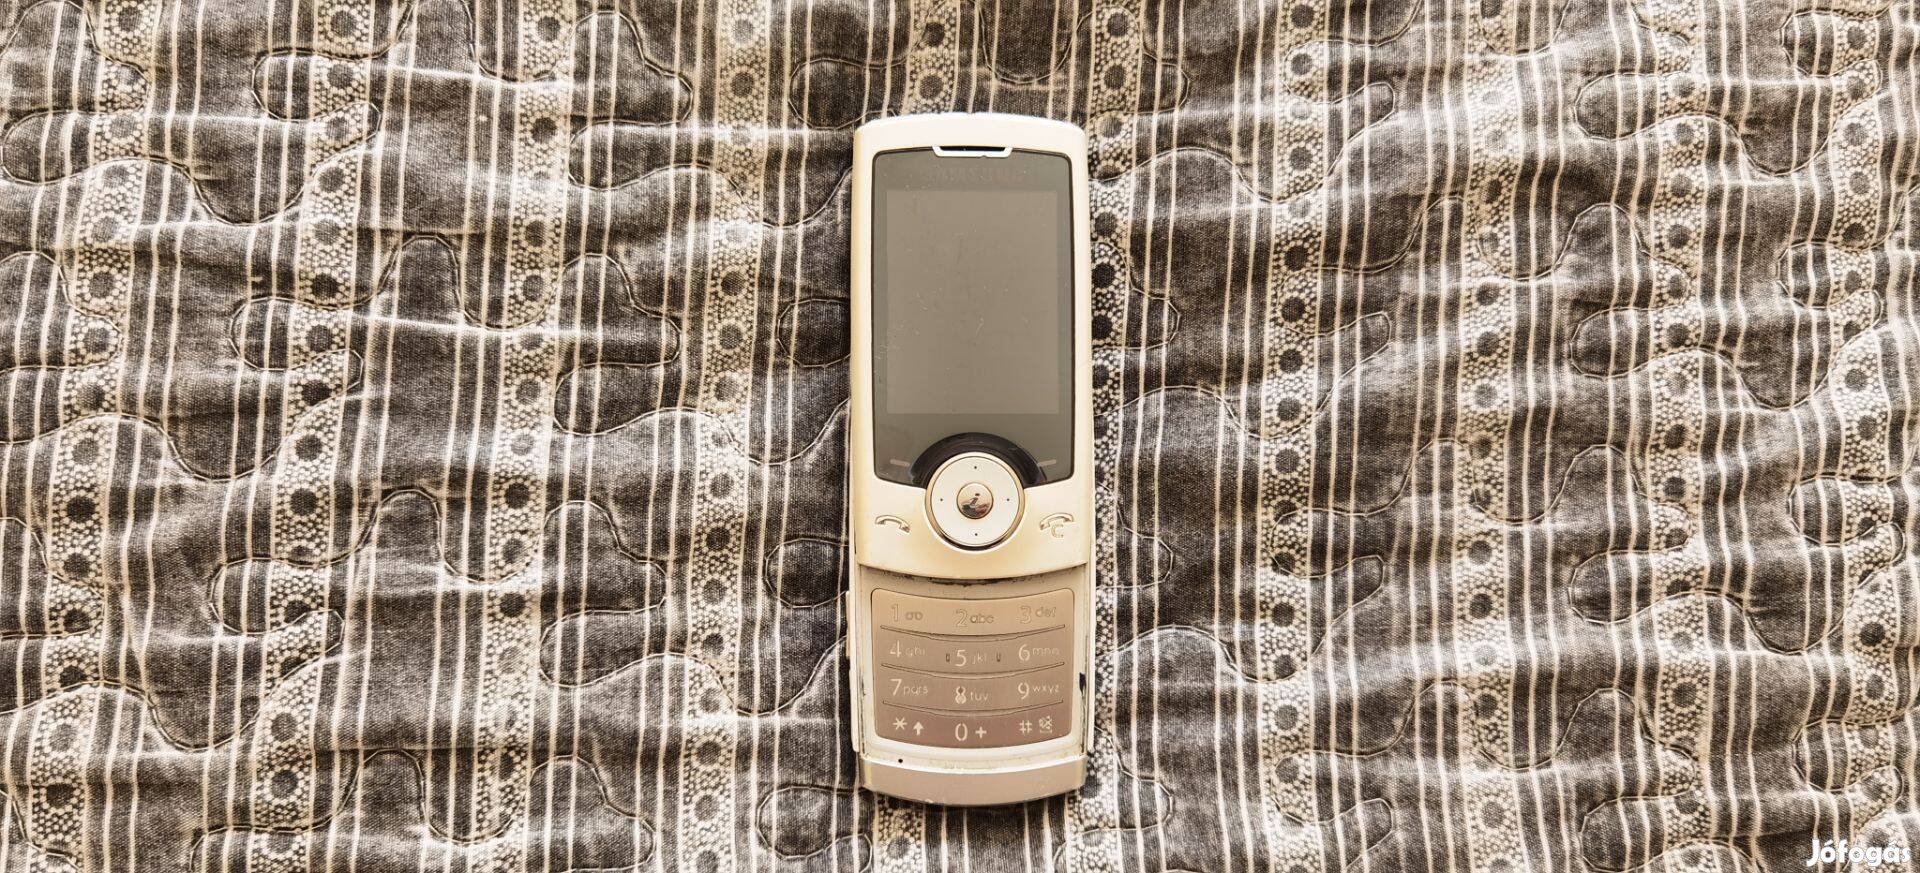 Samsung sgh-u600 mobiltelefon hagyományos nyomógombos telefon